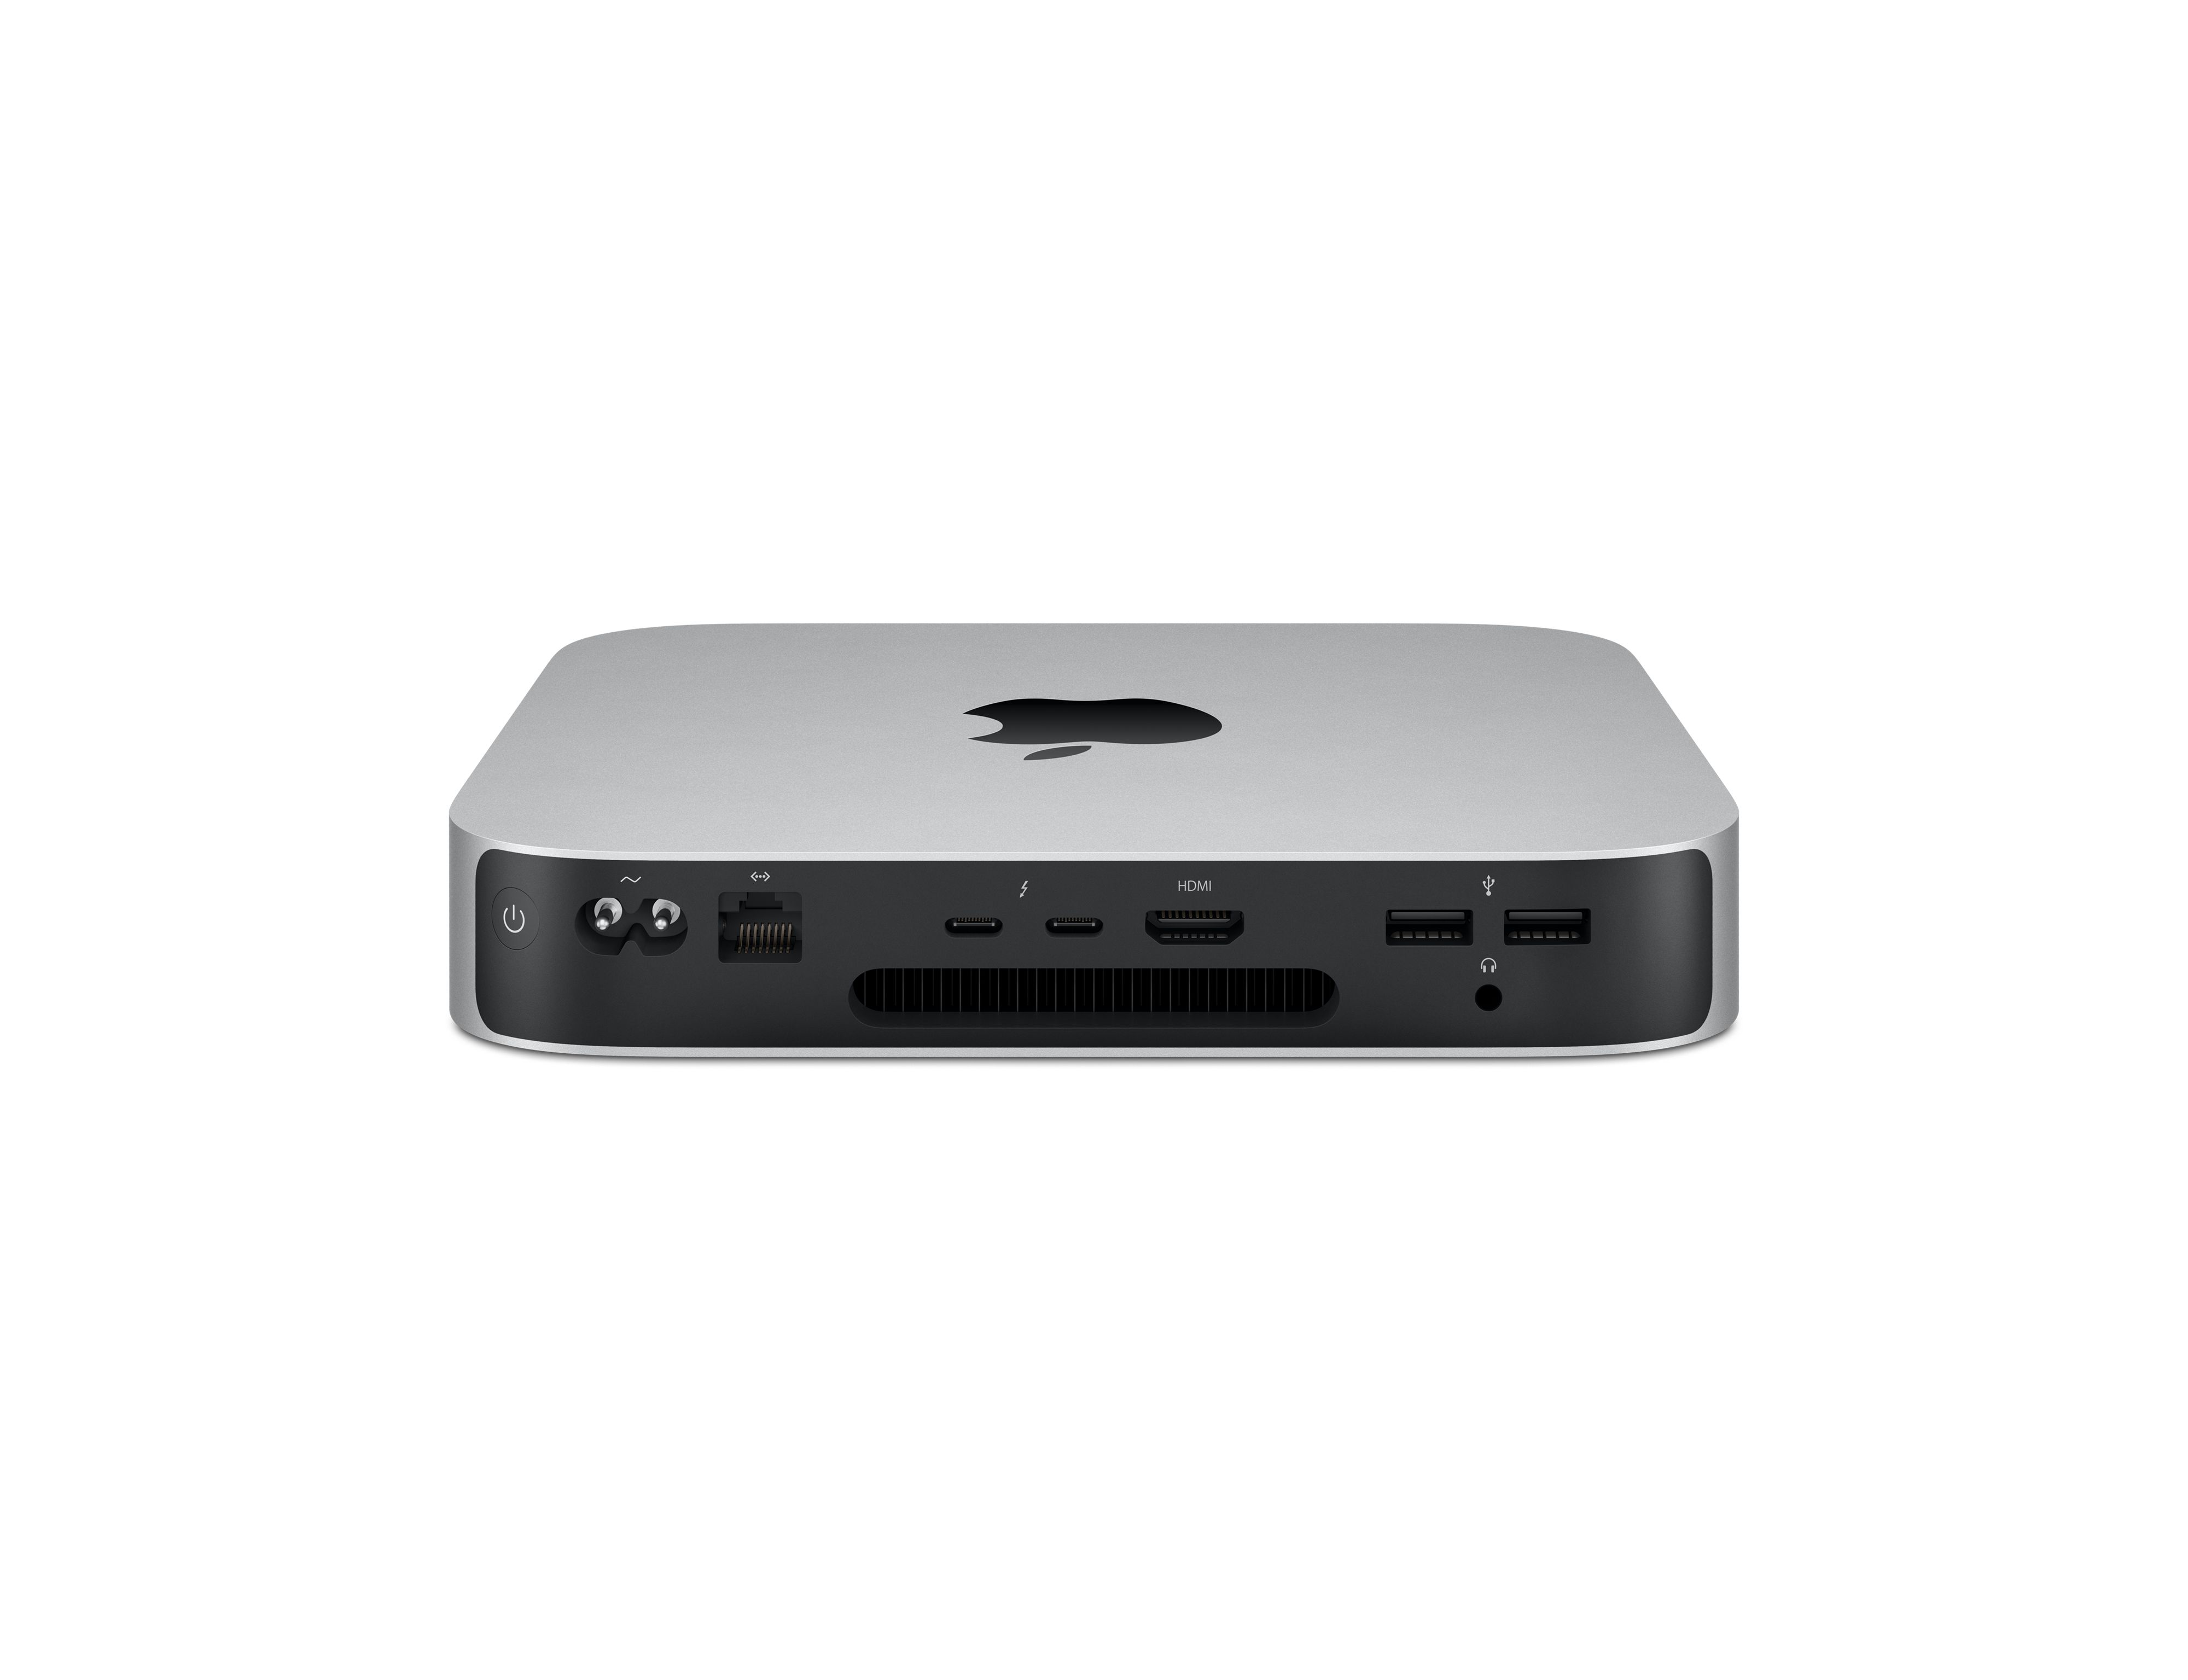 Modders successfully update storage and RAM on the M1 Mac Mini